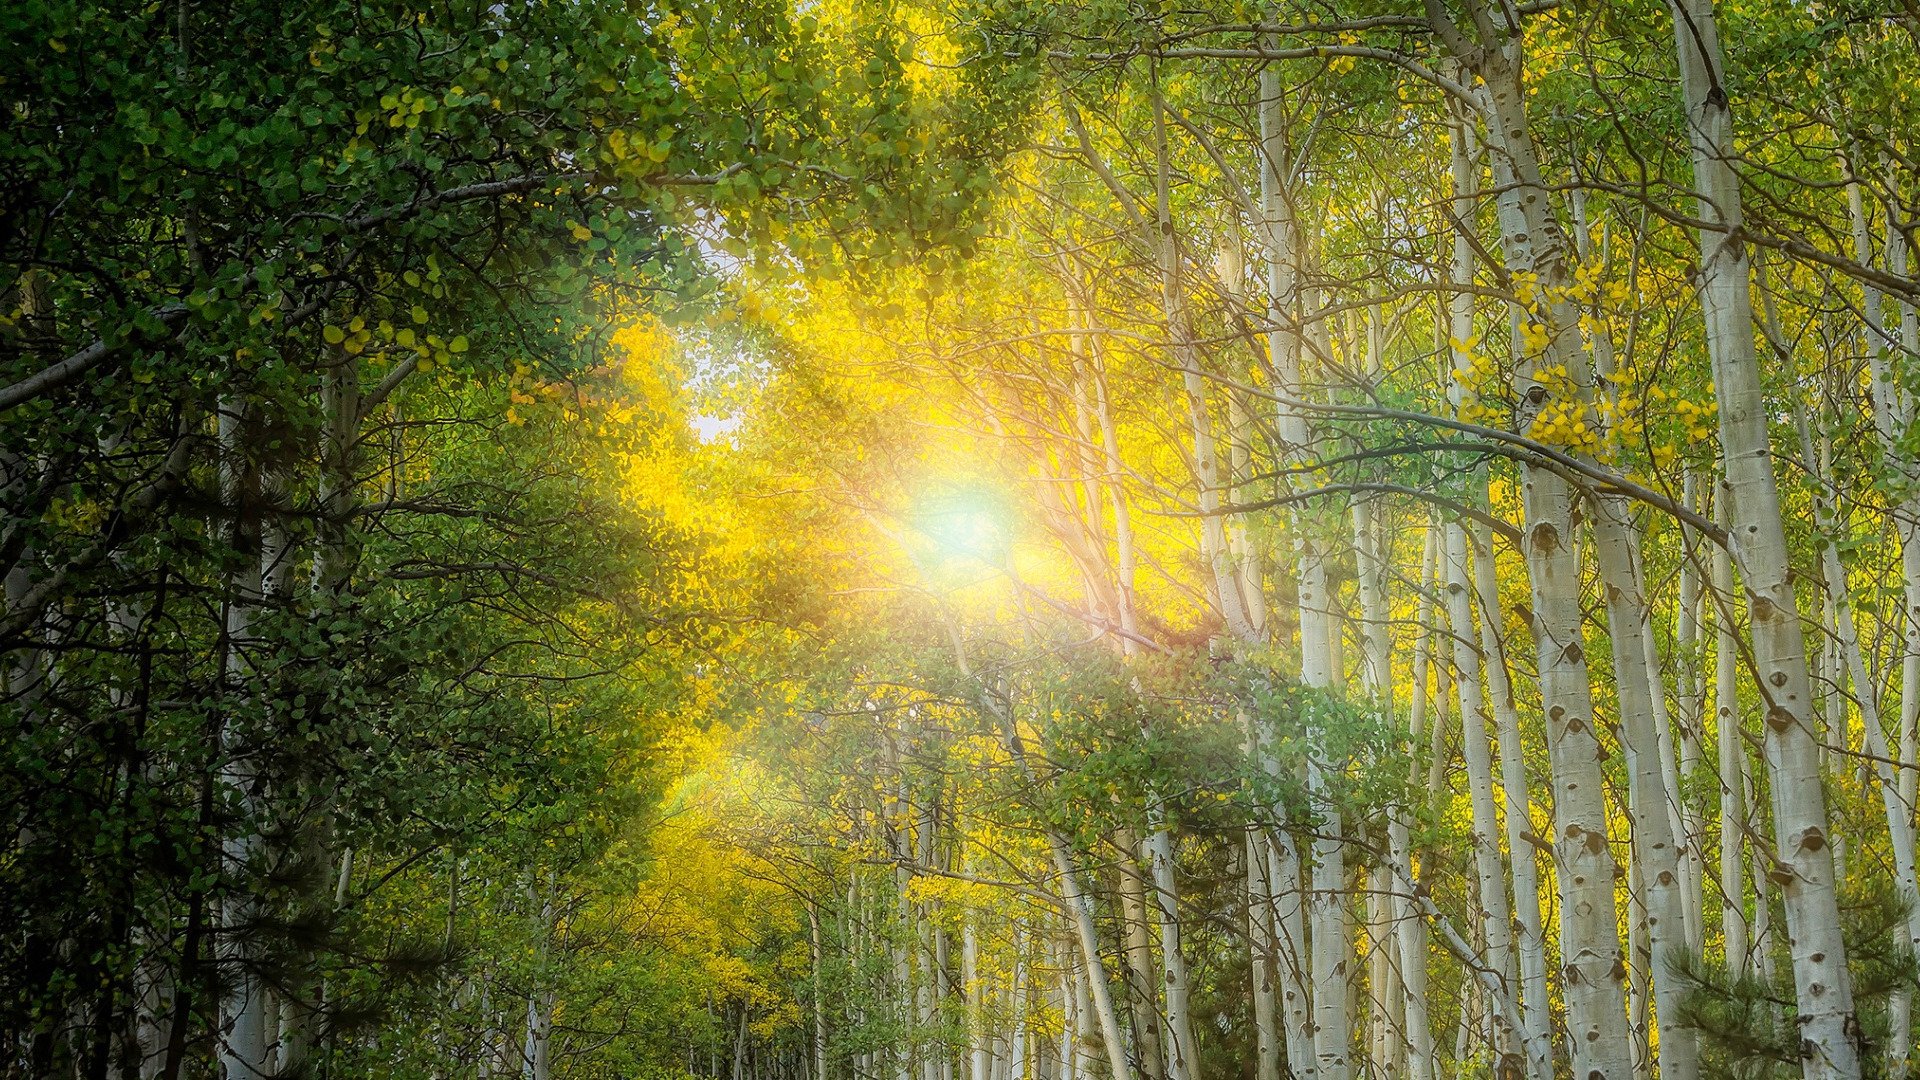 Гори солнце ярче лето будет. Природа солнце. Березовая роща солнце. "Солнце в лесу".